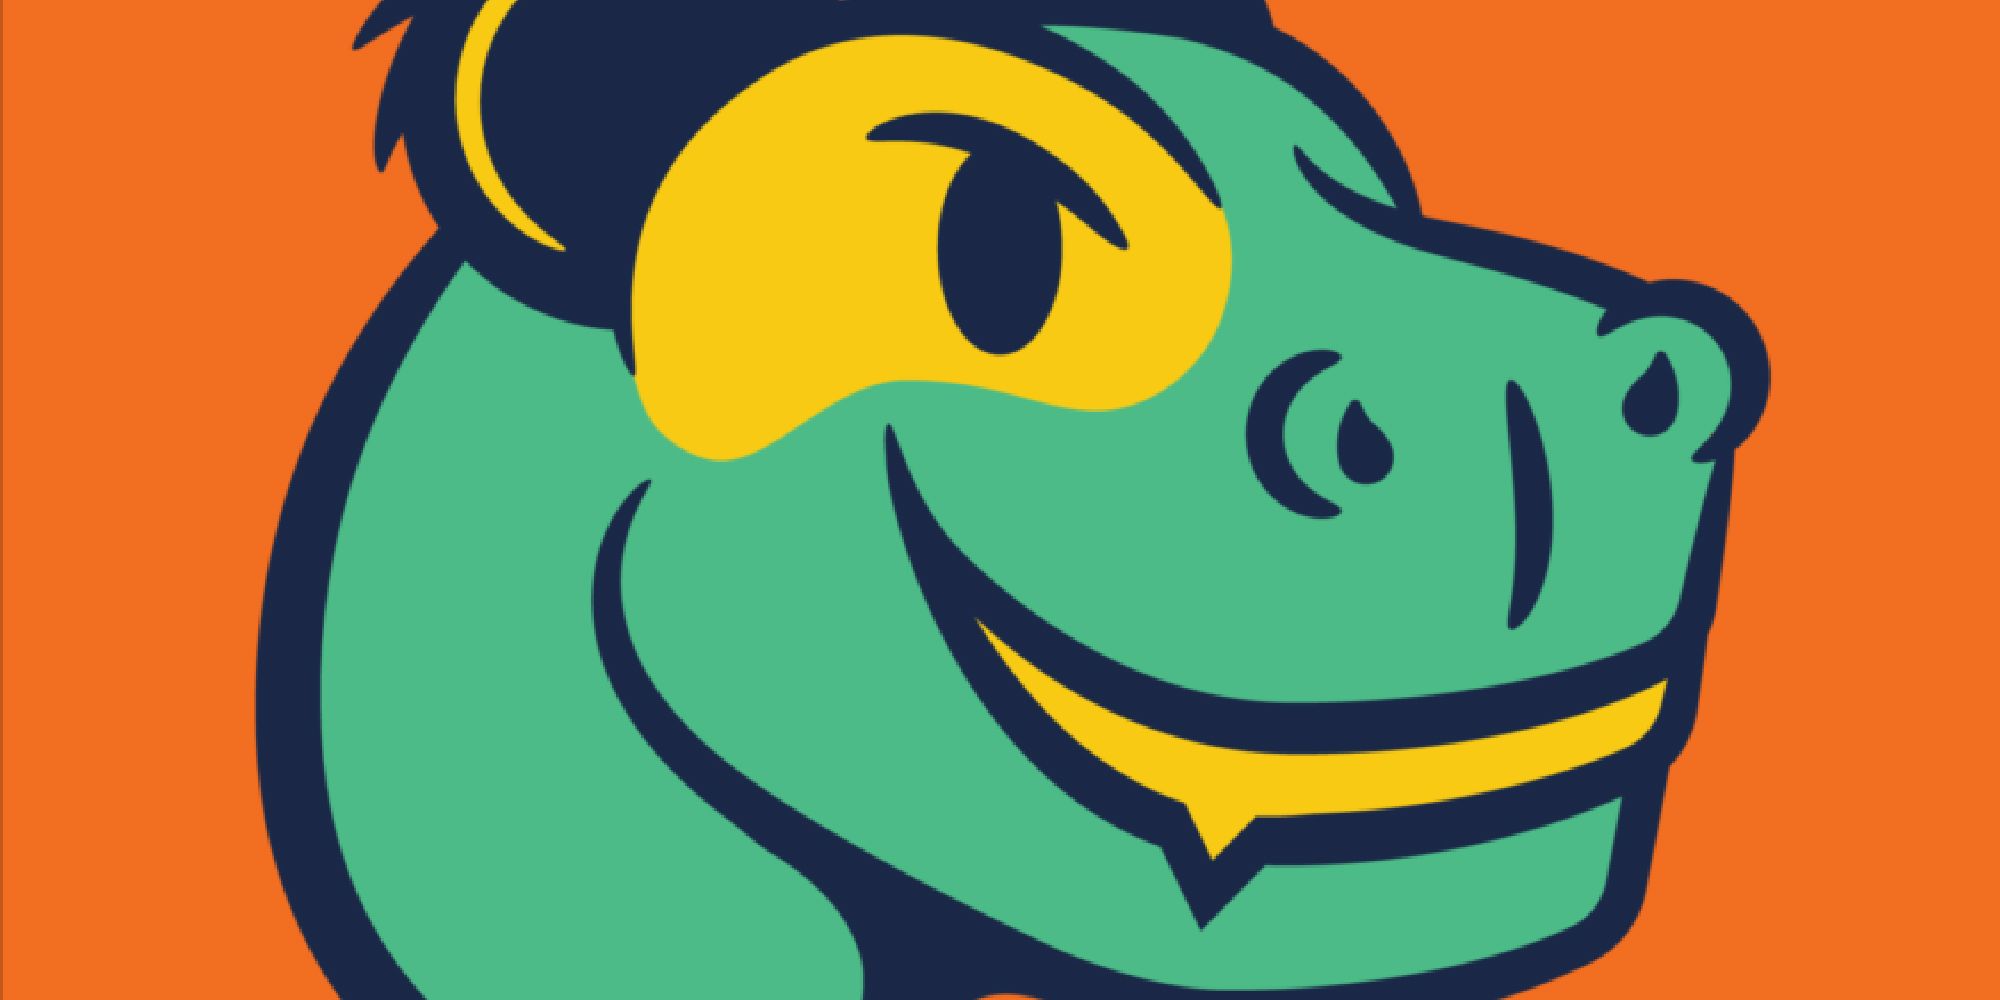 Pandasaurus logo, a giant green cartoon dragon head, on an orange background